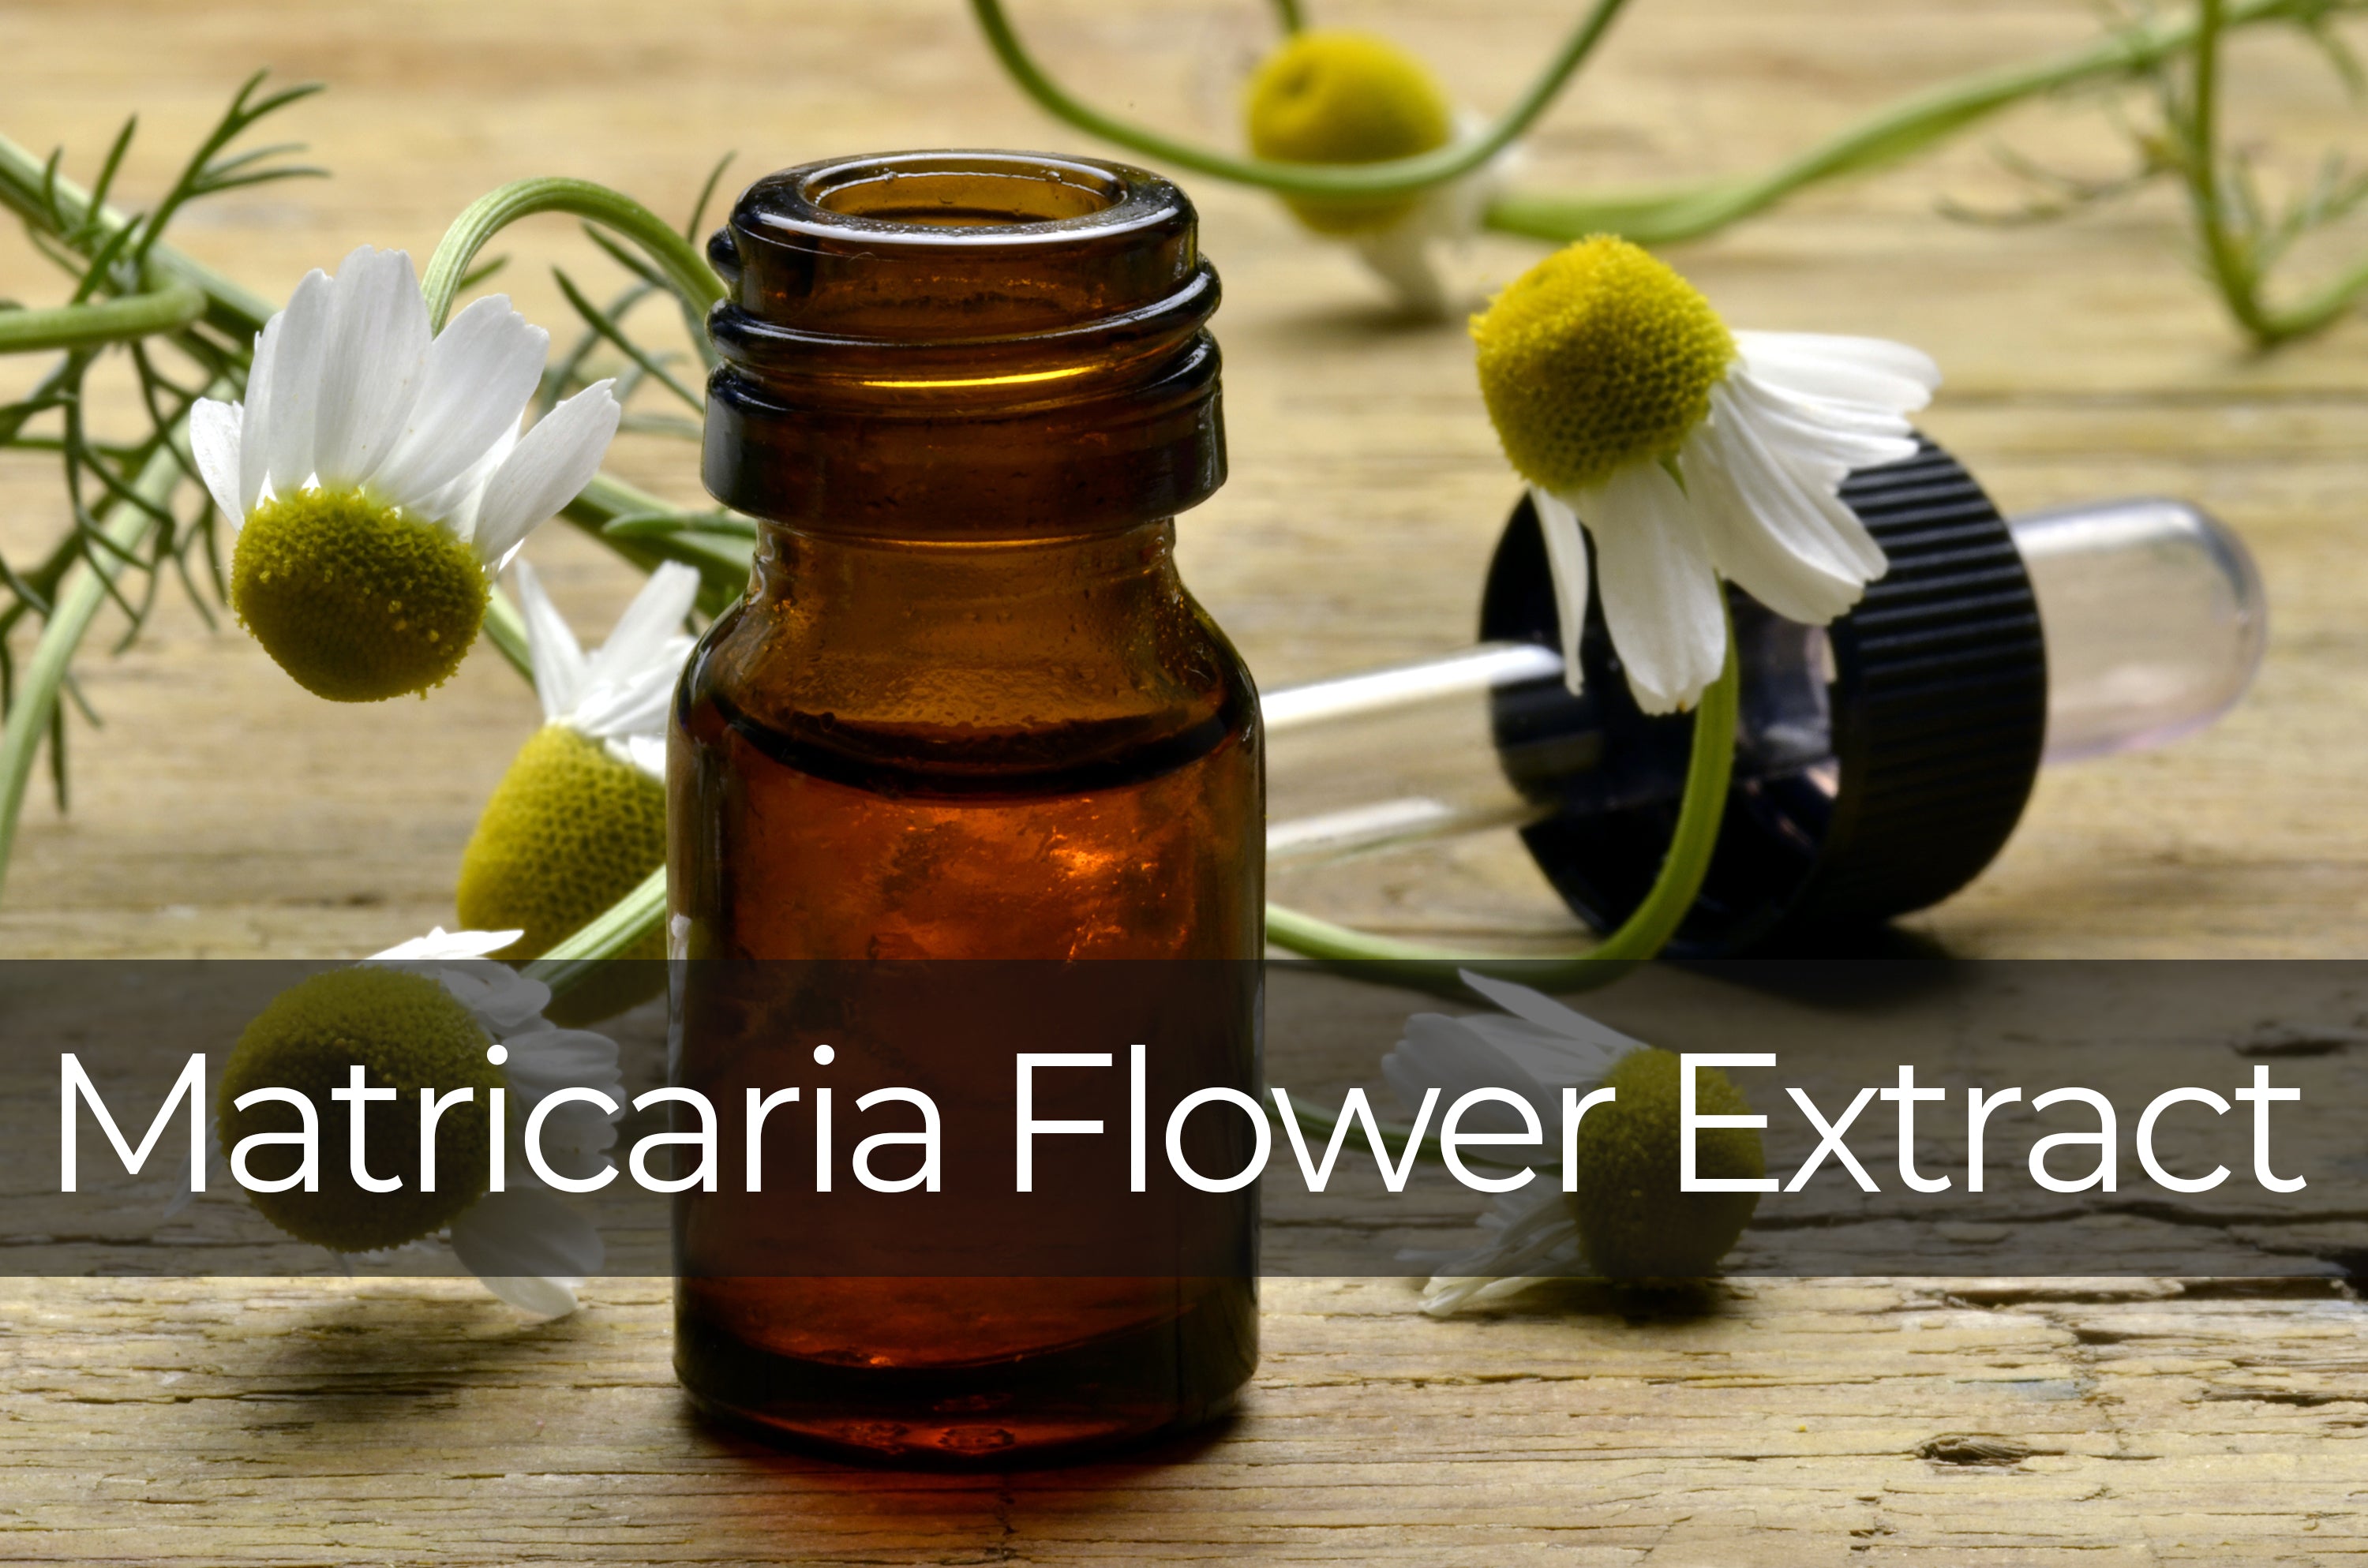 Prismax Ingredient: Matricaria Flower Extract